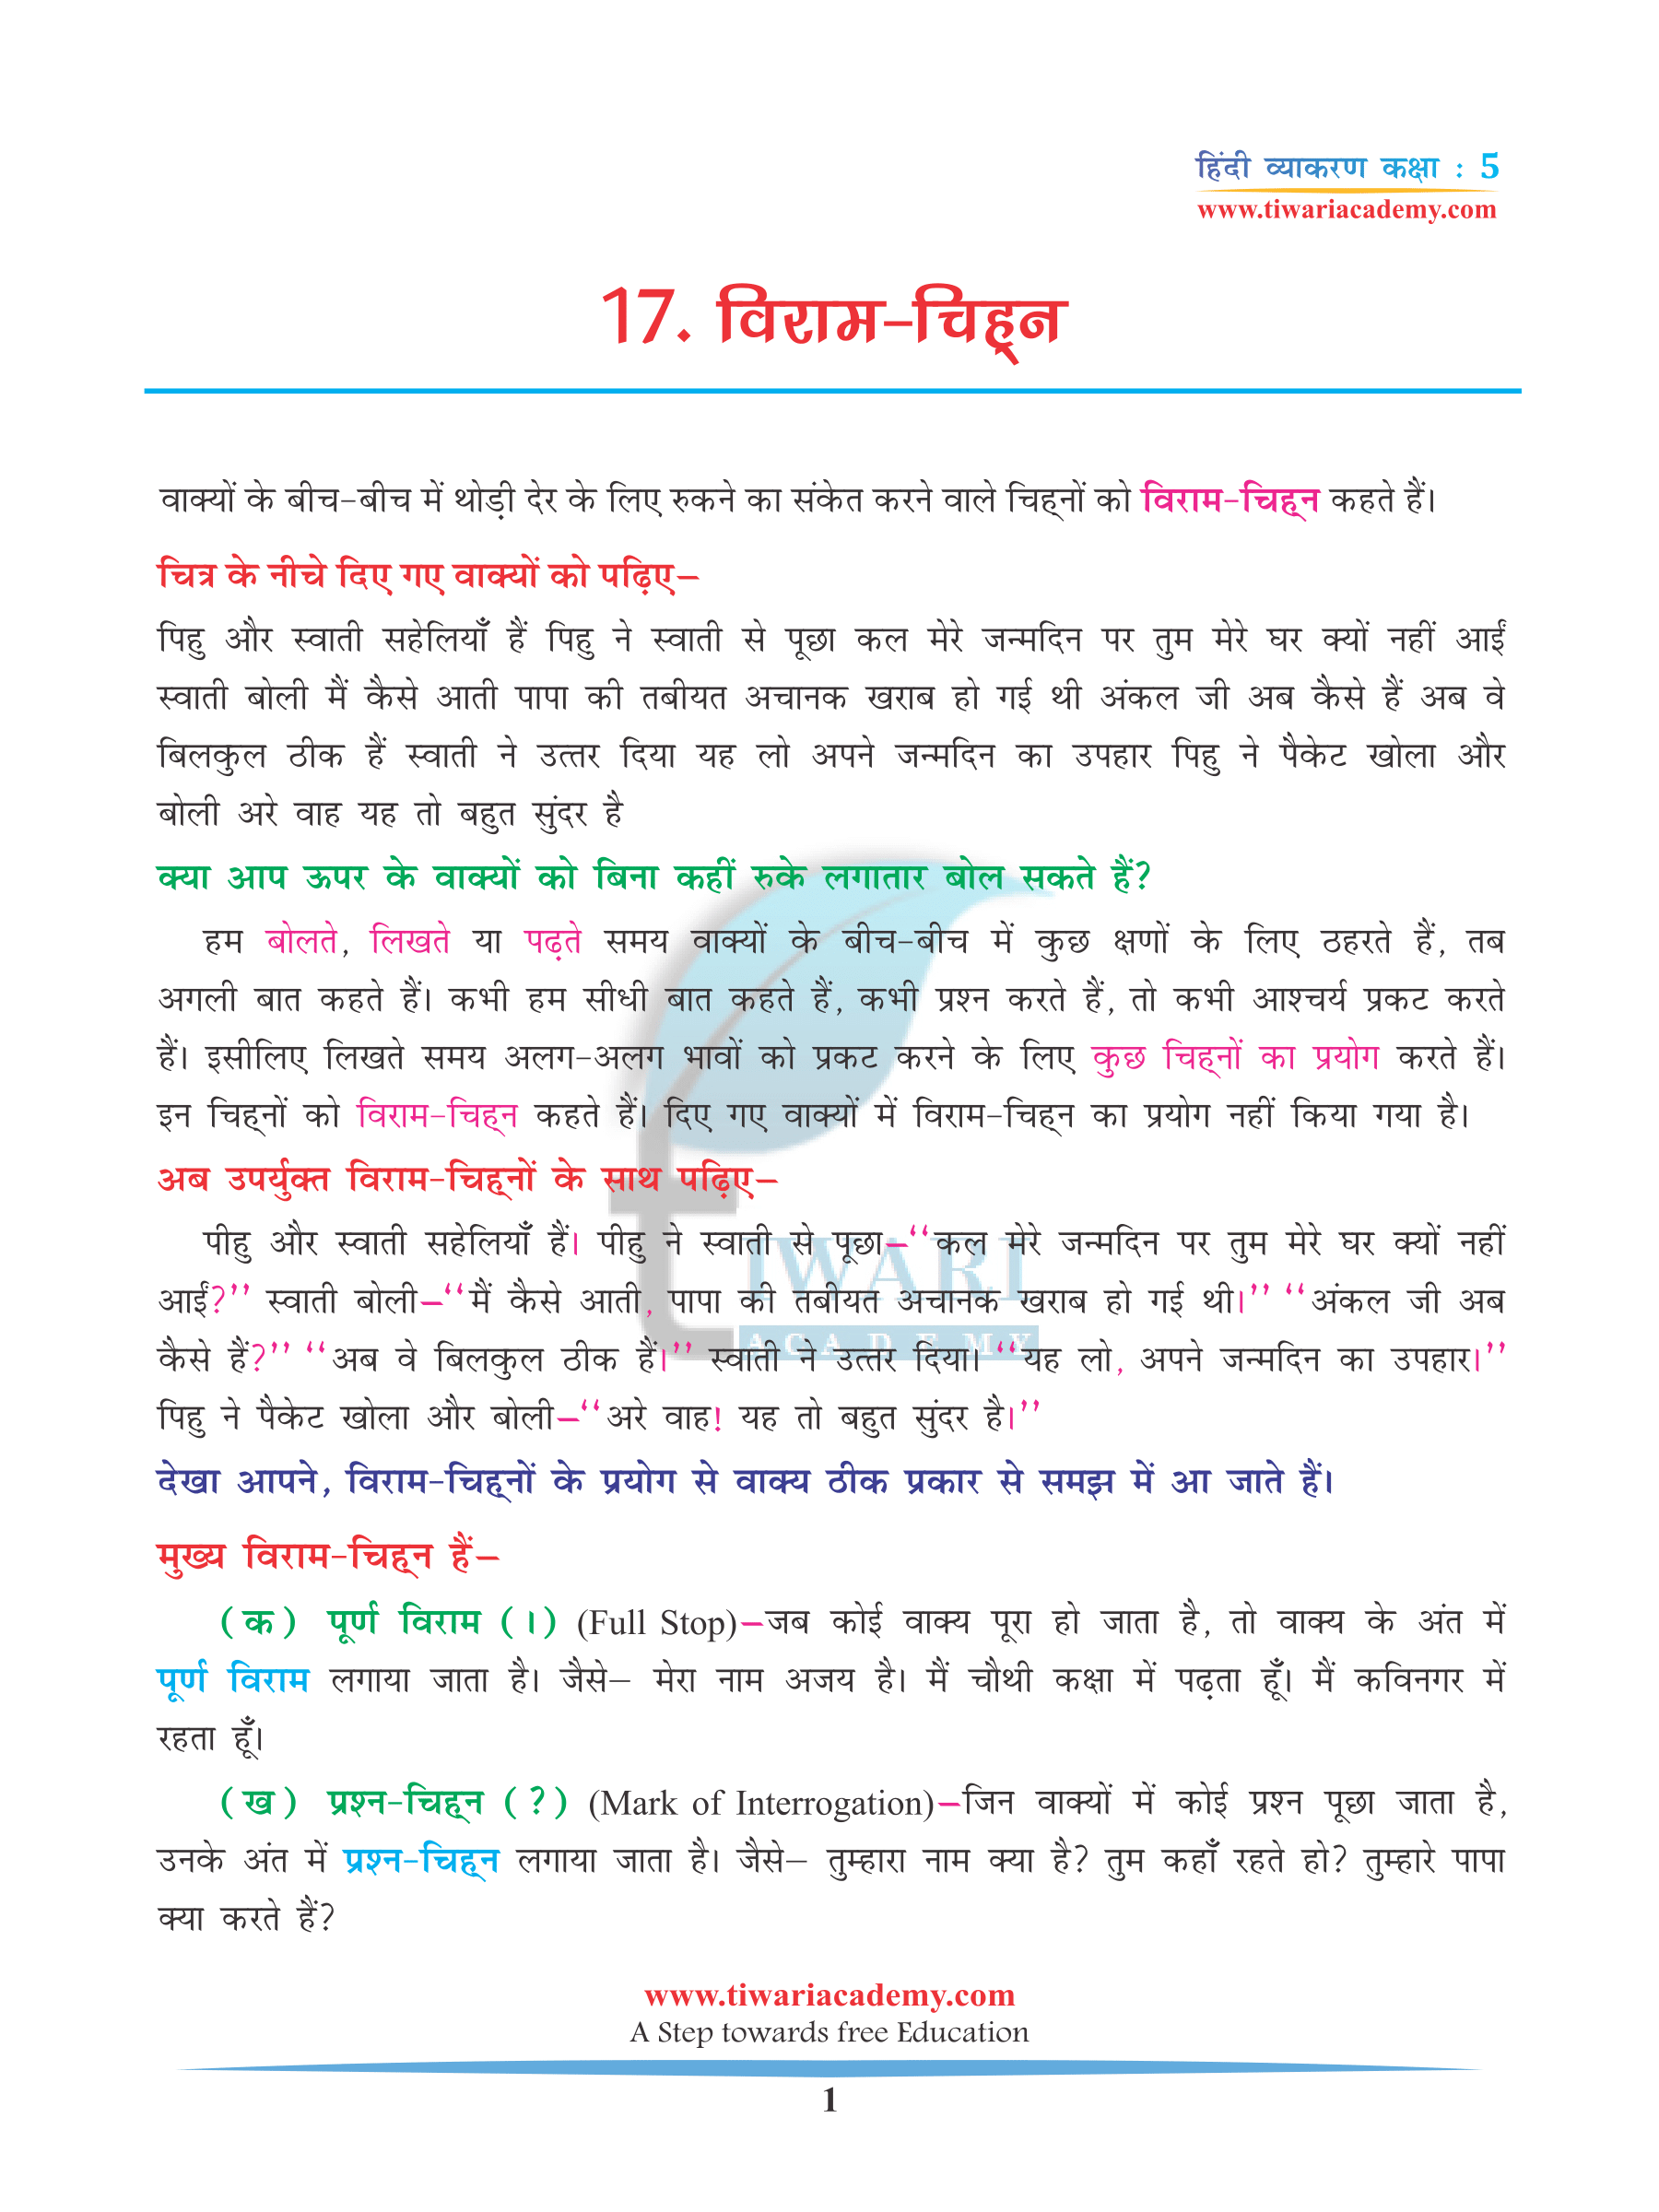 NCERT Solutions for Class 5 Hindi Grammar Chapter 17 Viram Chinh